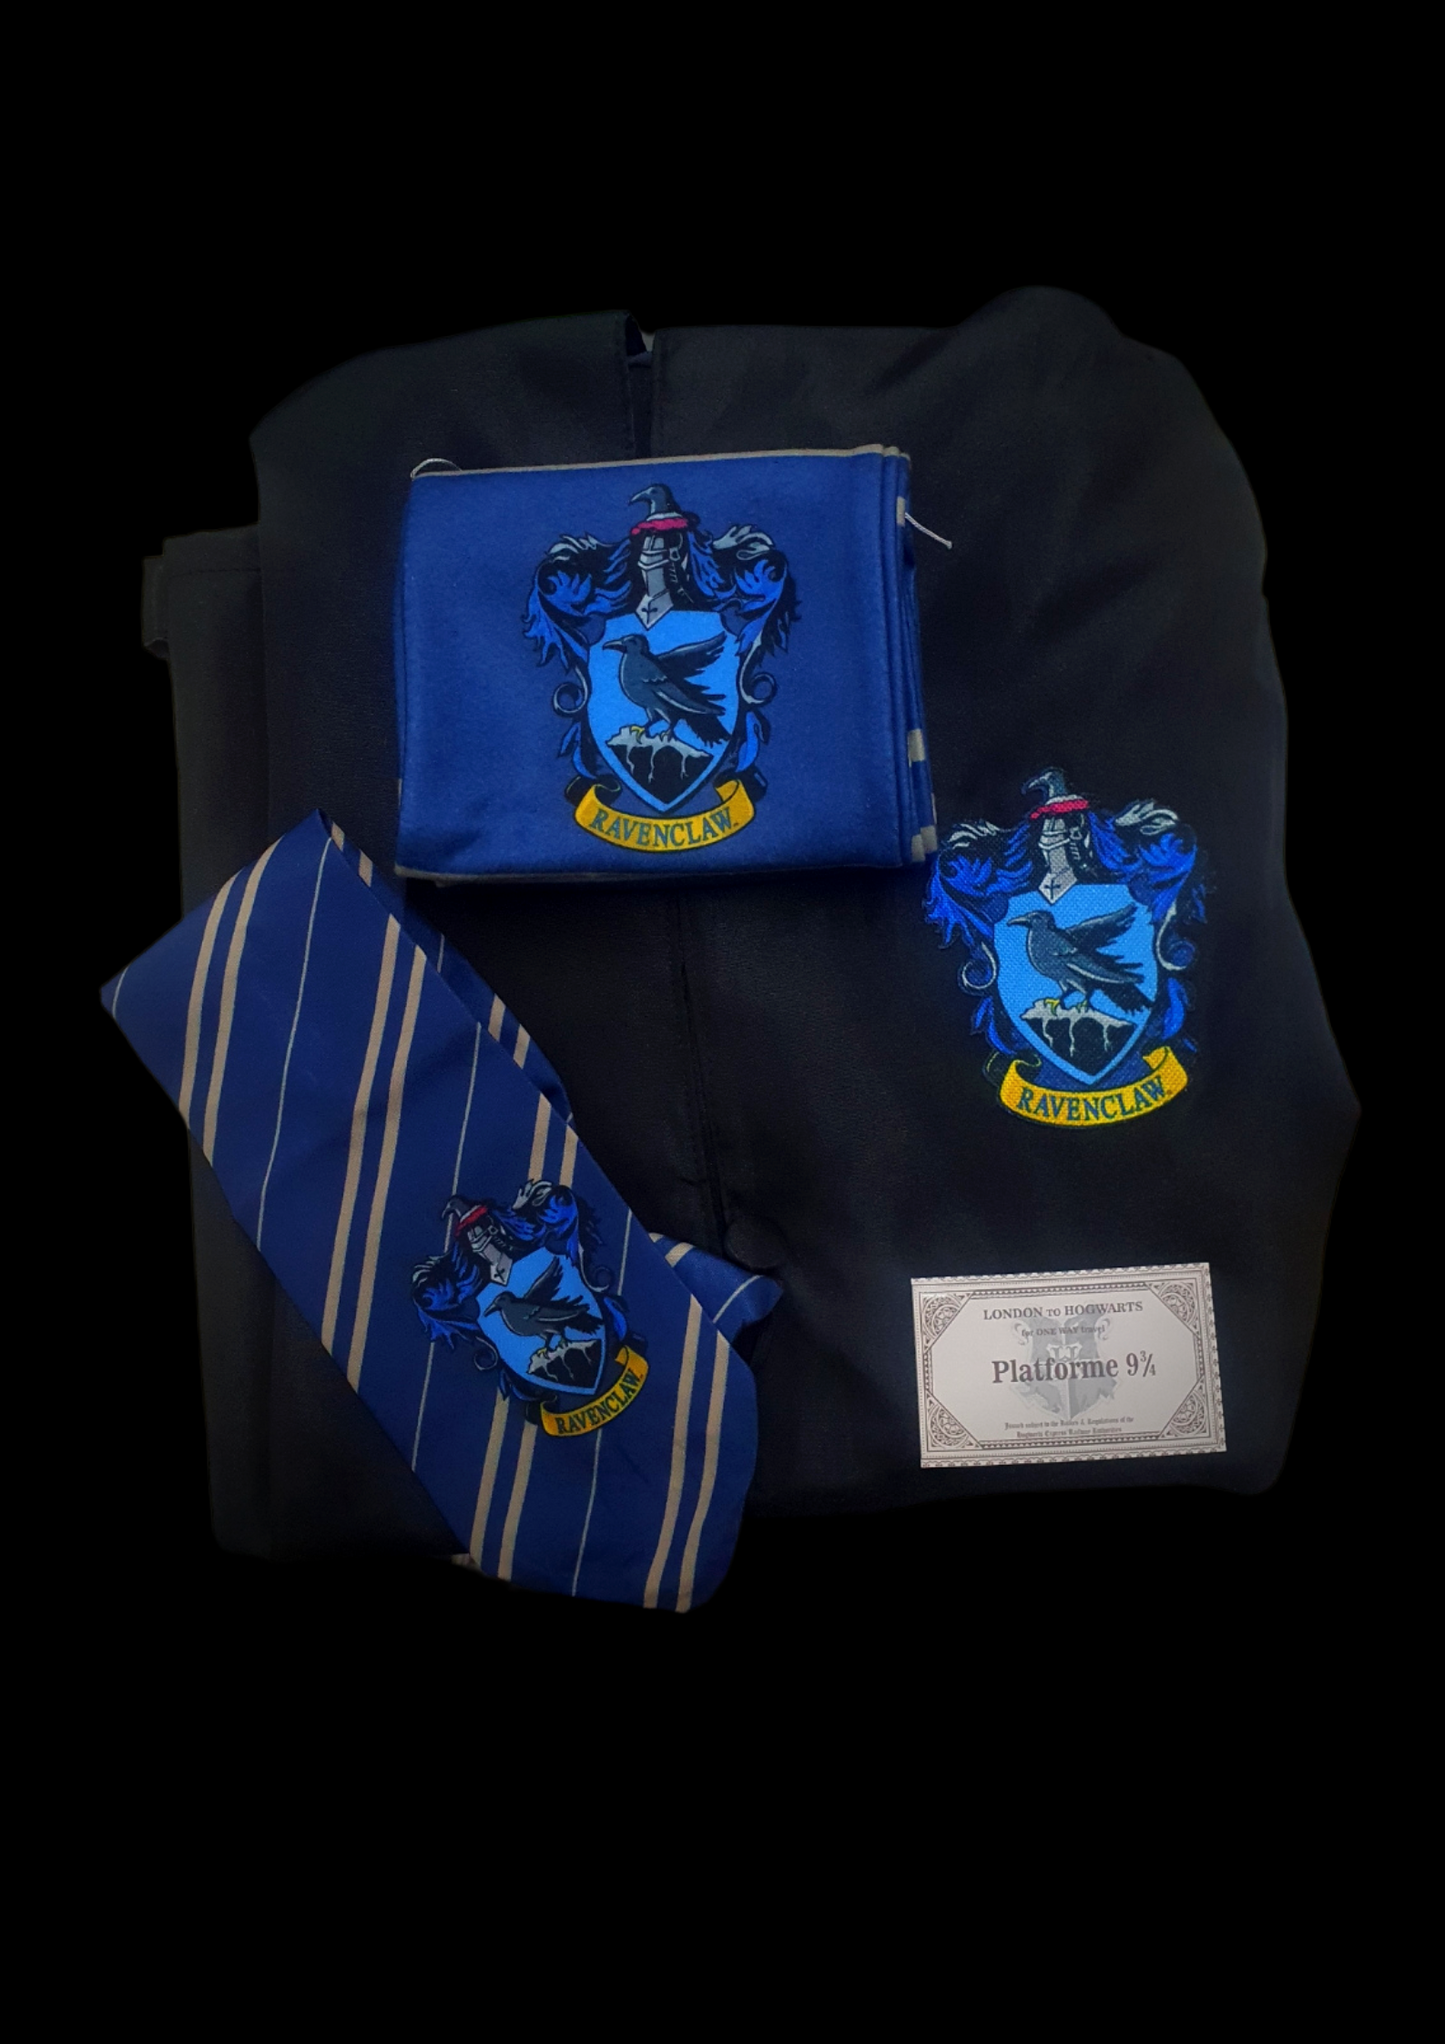 Kit Harry Potter Infantil (Unisex) (Capa, bufanda y corbata)